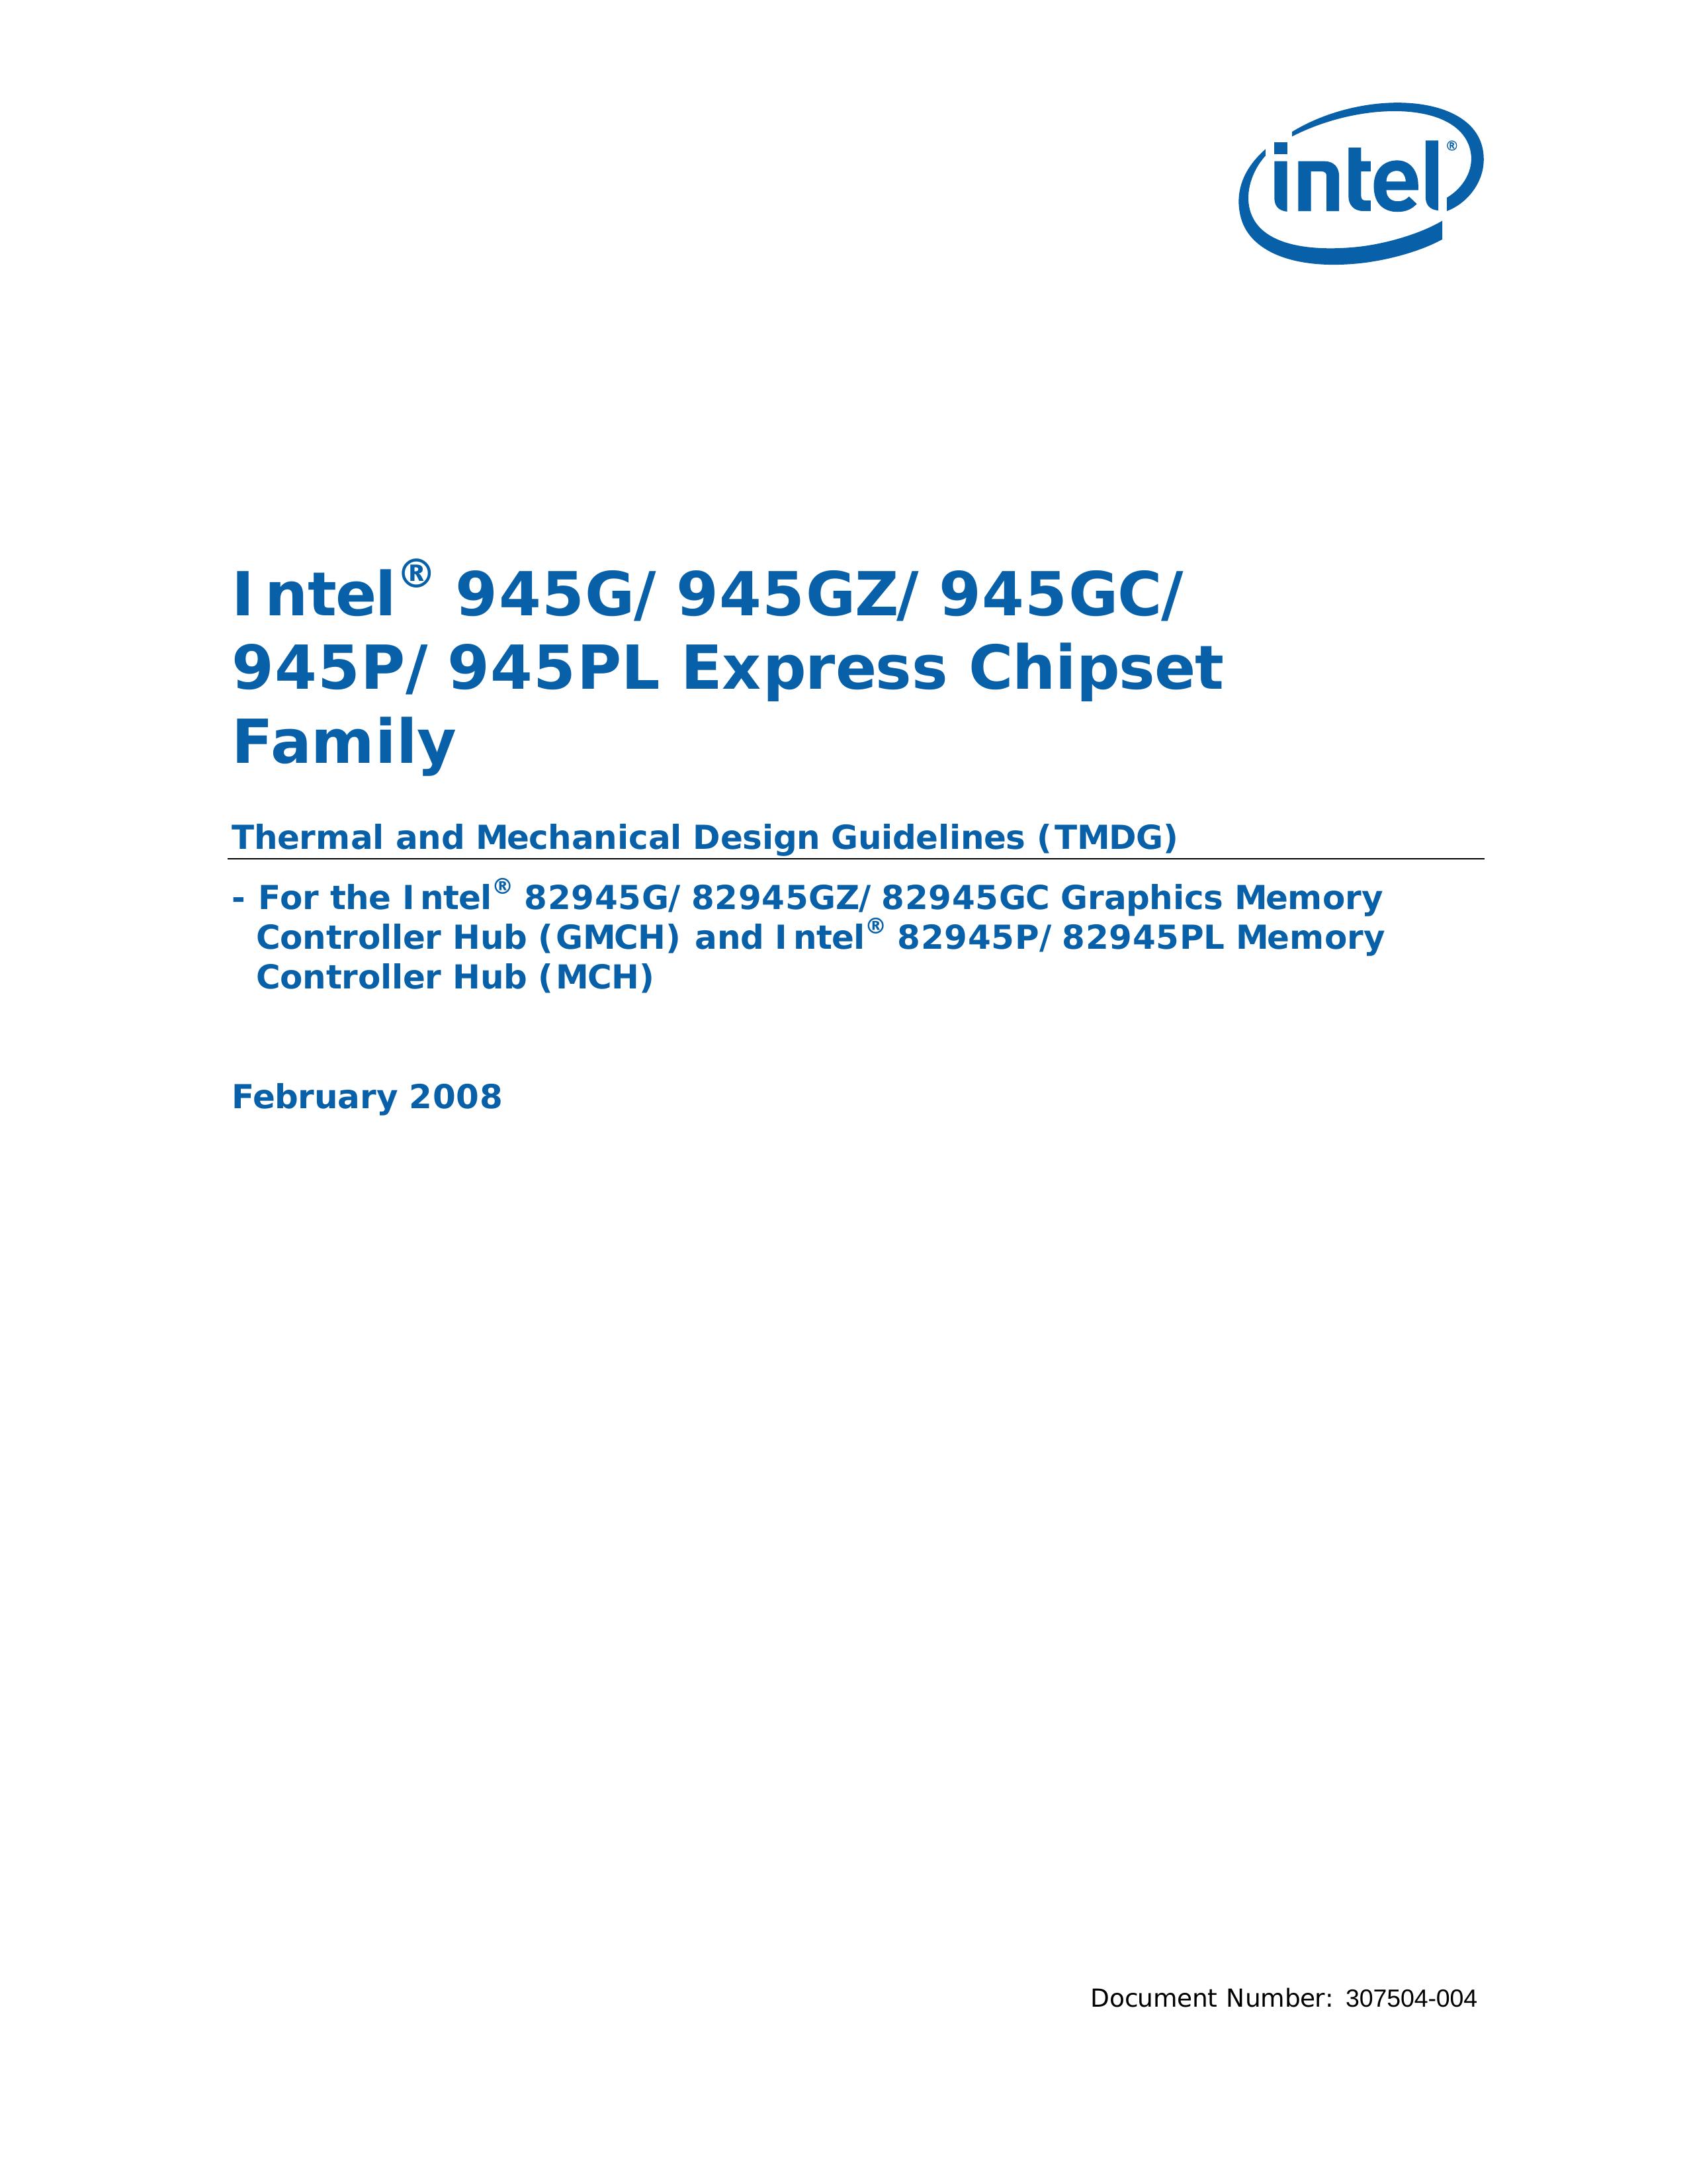 Intel 945G Chipper User Manual